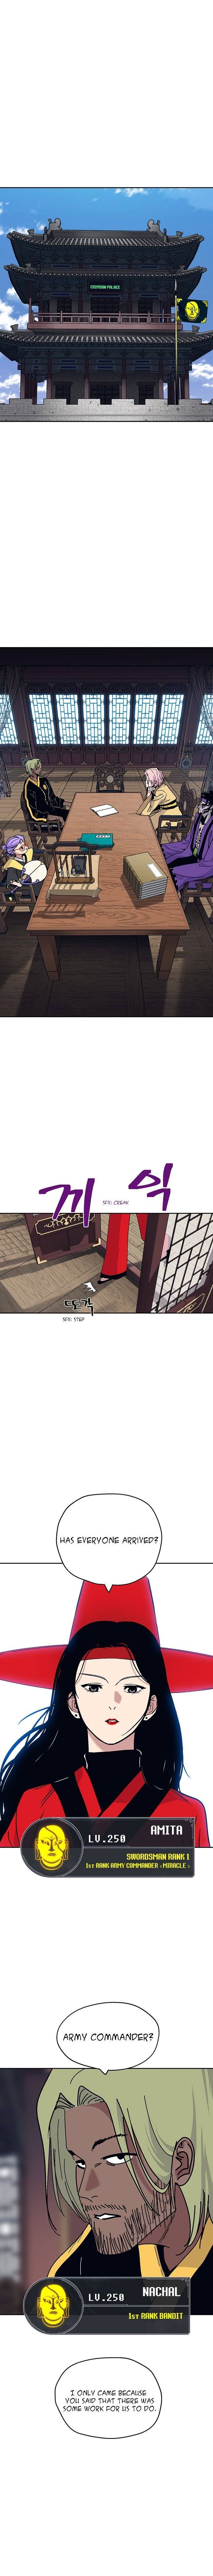 Taebaek: The Tutorial Man Chapter 26 page 2